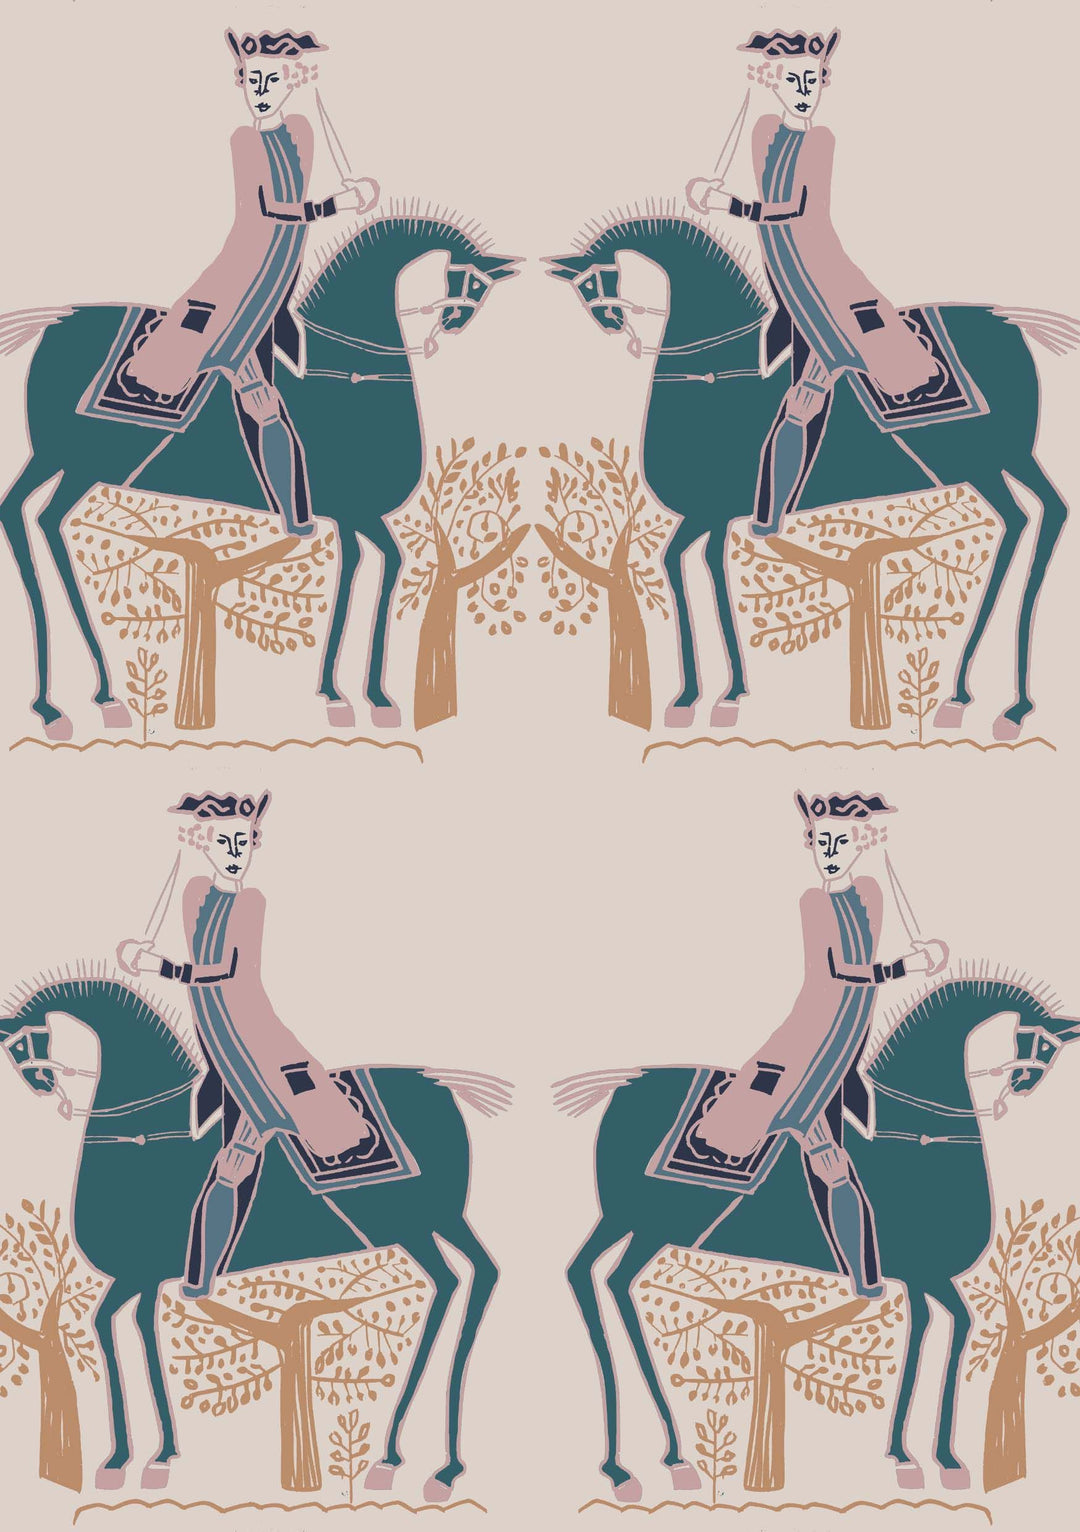 Annika-Reed-Redcoat-tapestry-artisan-printed-wallpaper-ARRC02-horses-printed-man-on-horse